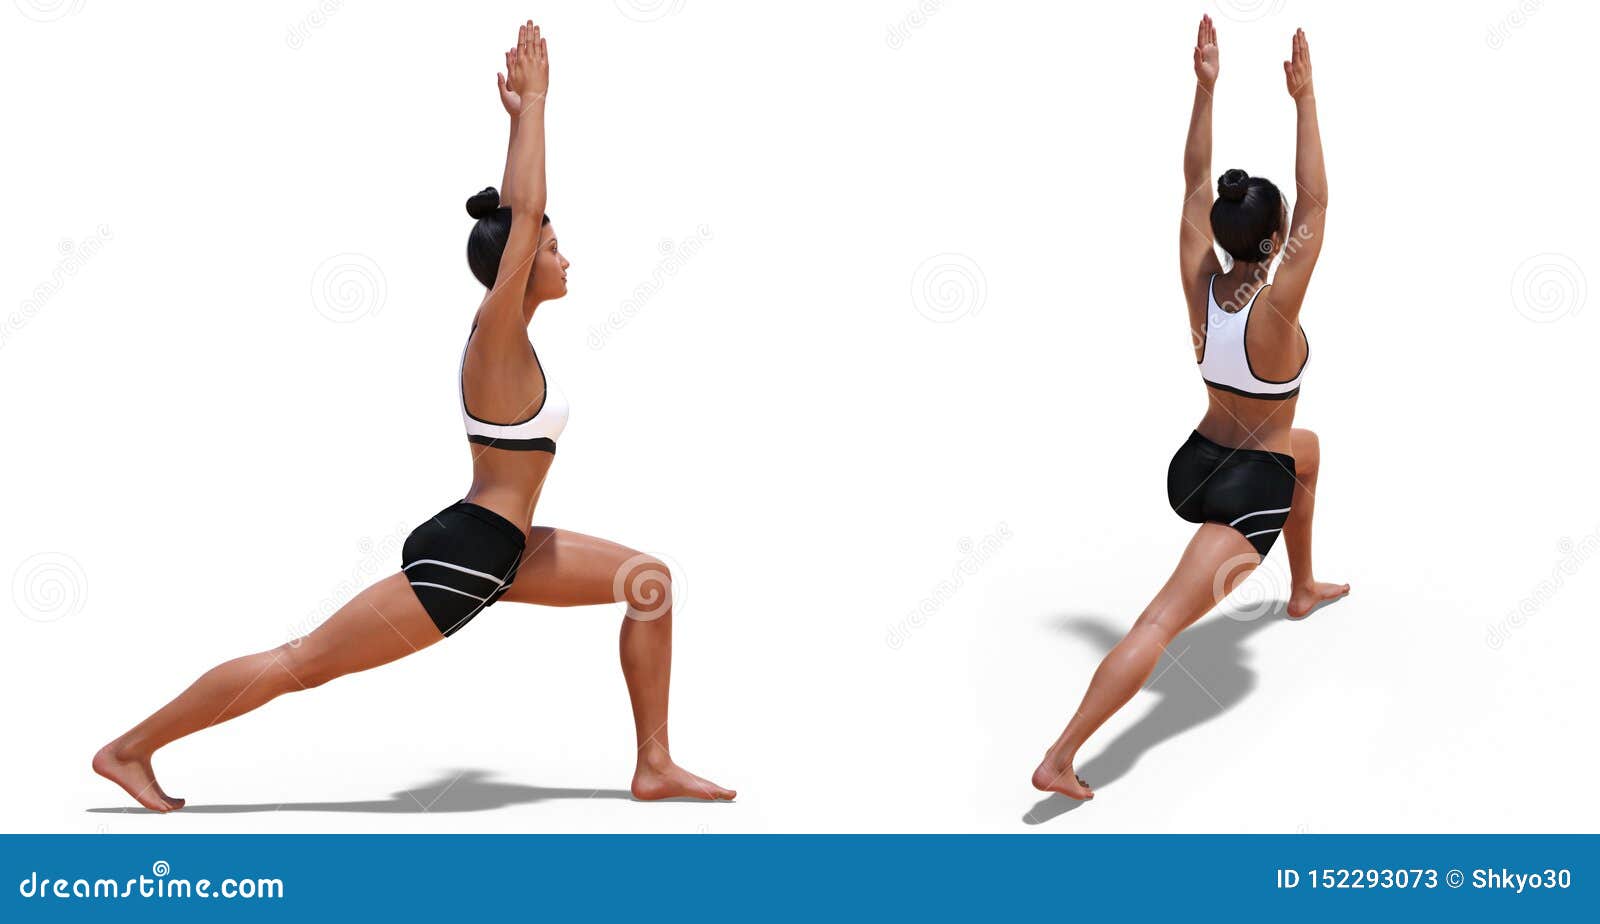 Gymnastics acro | 3 person yoga poses, Acro yoga poses, Three person yoga  poses